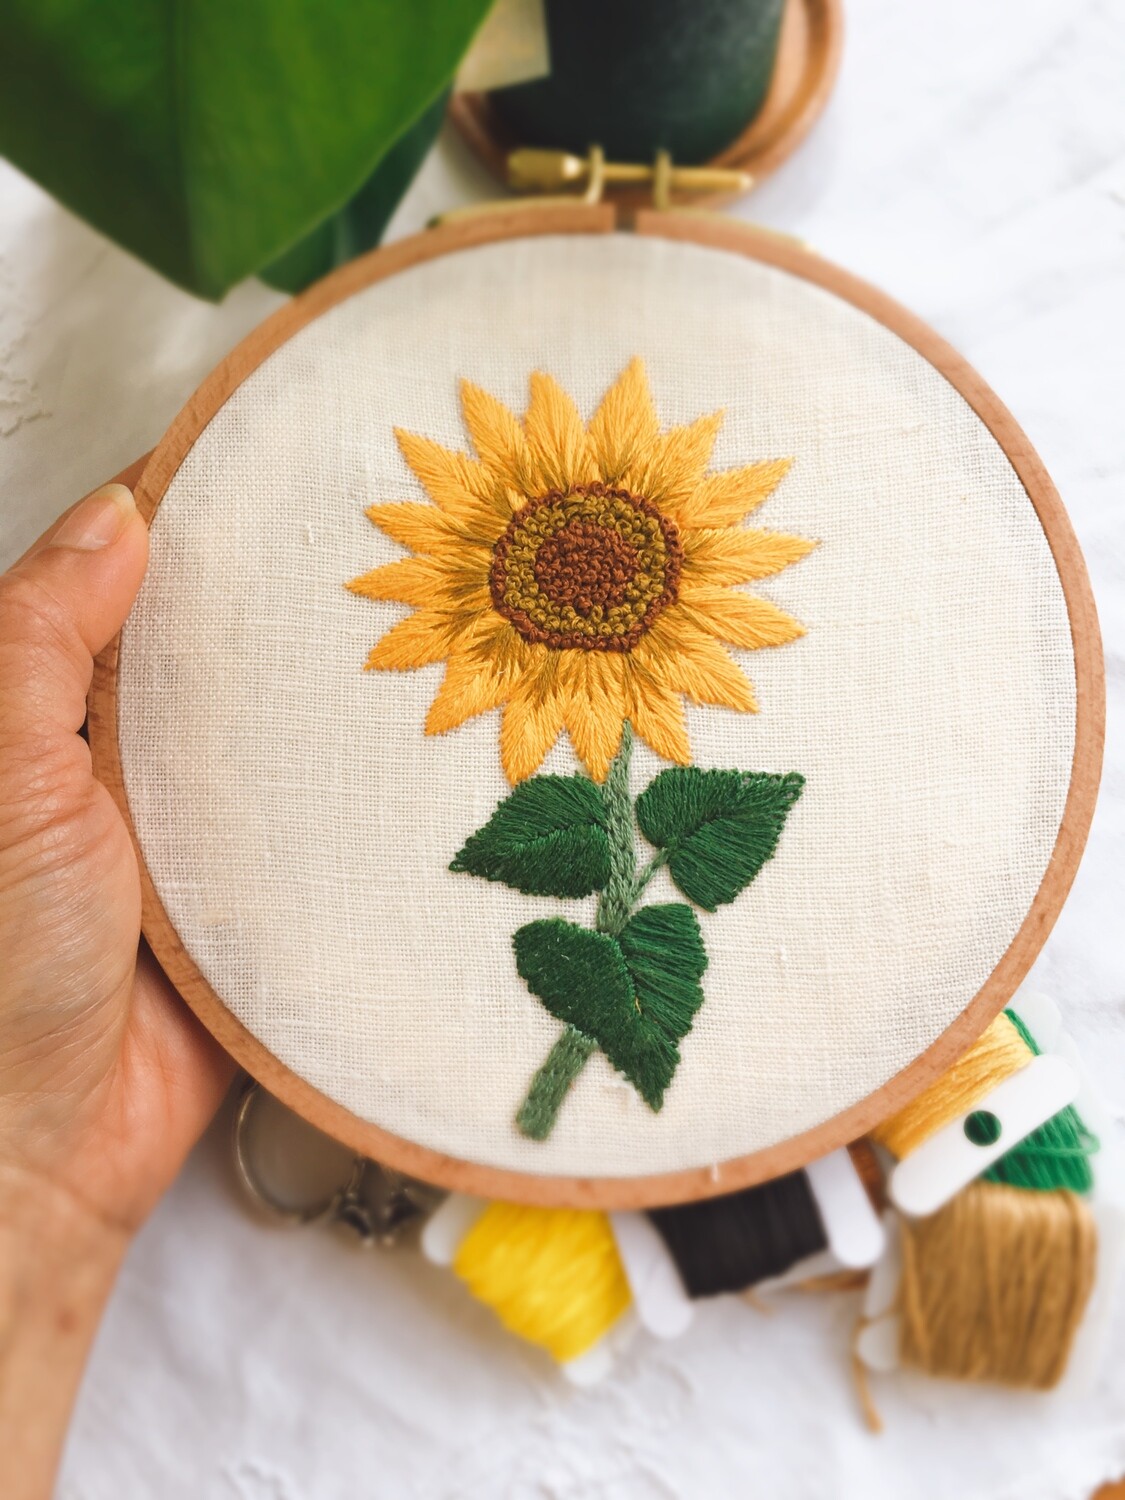 Flower Power Gift Box w. Dwarf Sunflower, Embroidery Kit